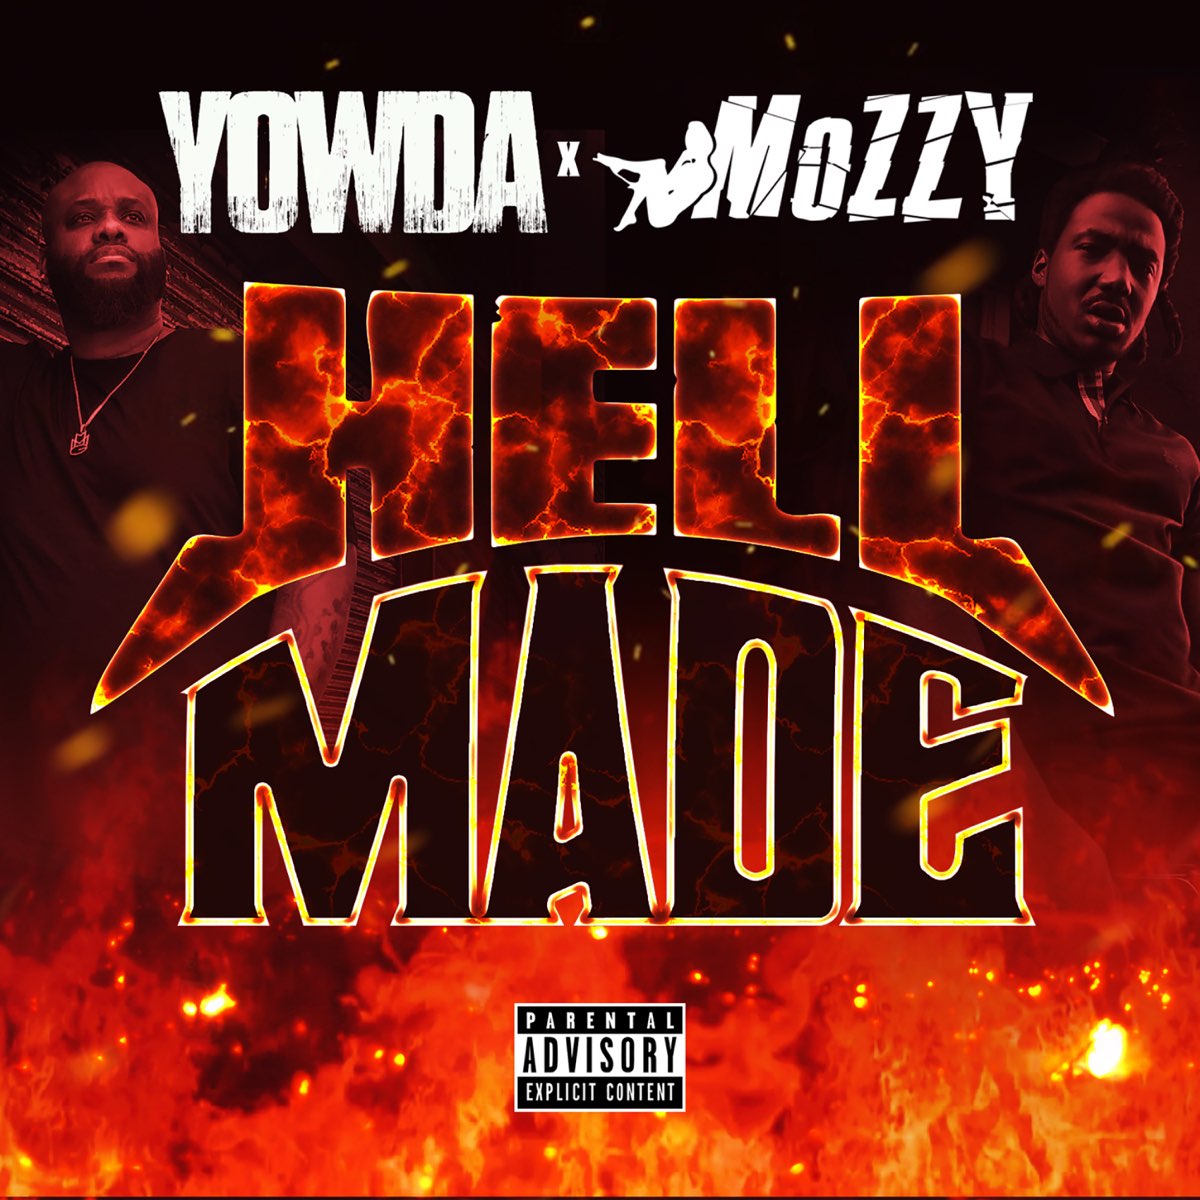 Yowda & Mozzy - Hell Made